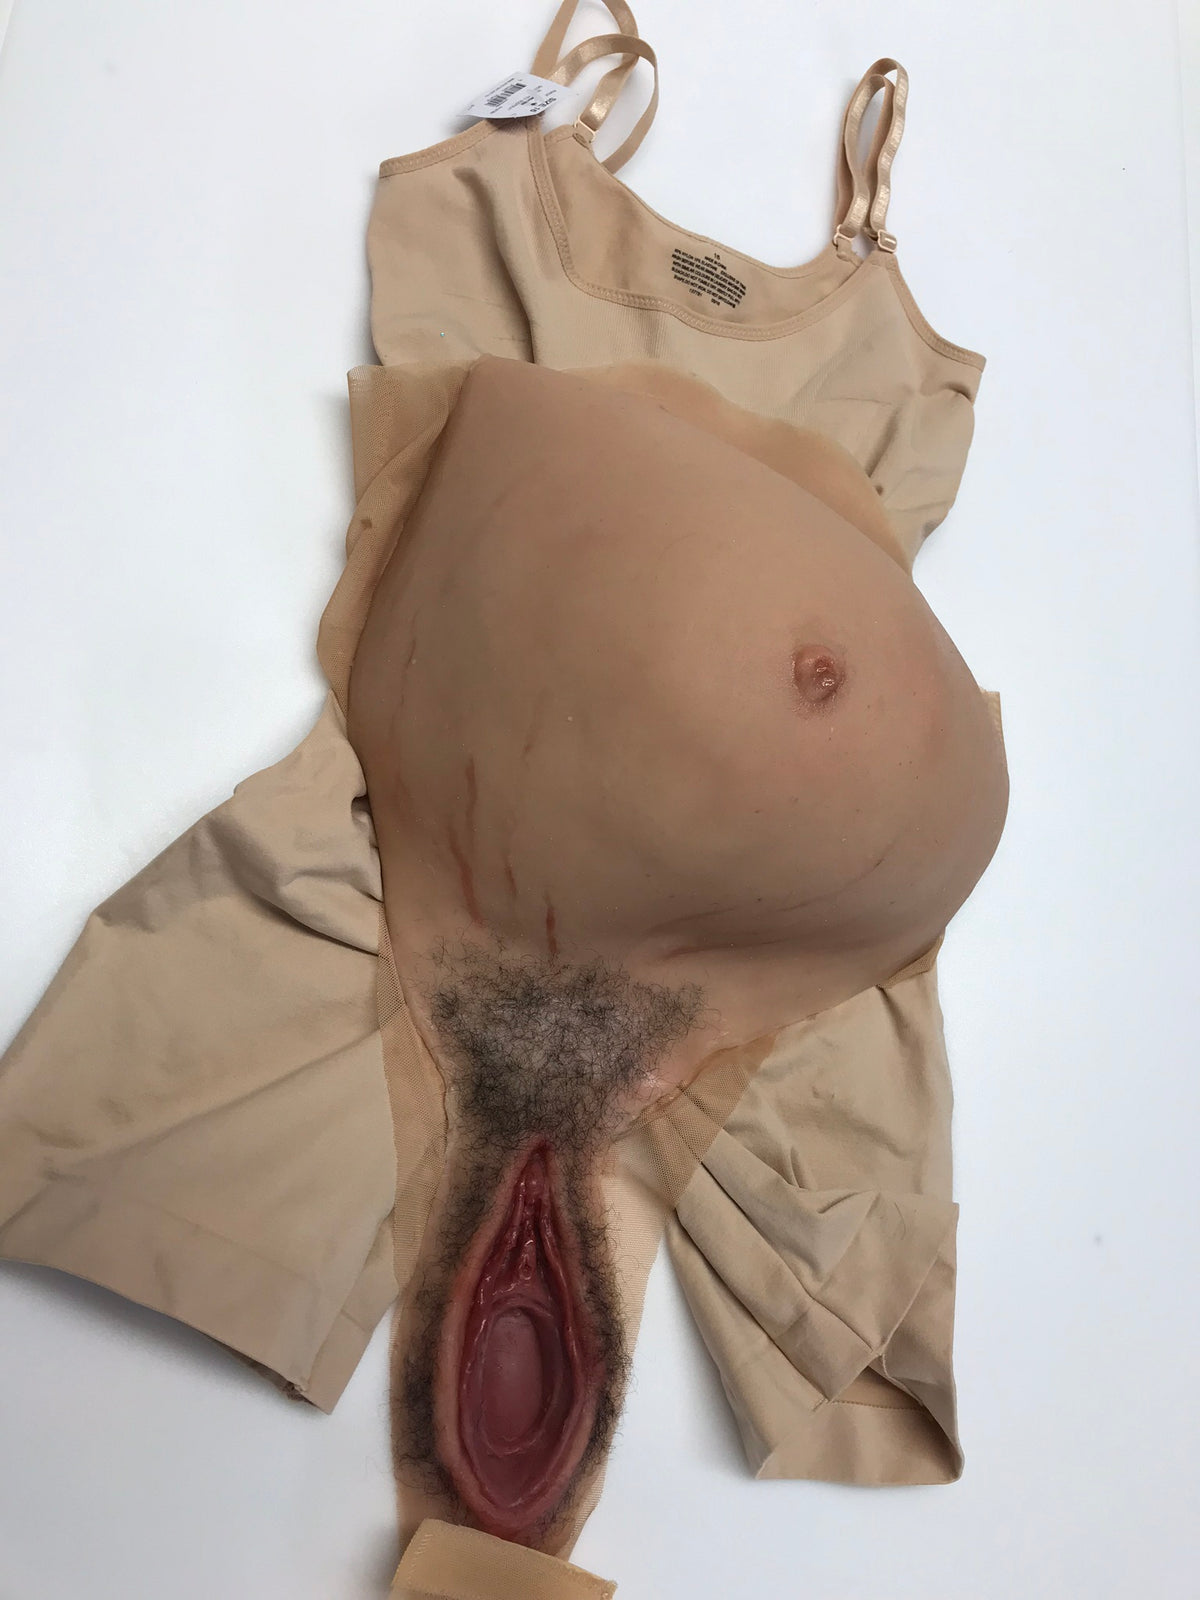 MO704 Pregnant Belly Medium With Vulva